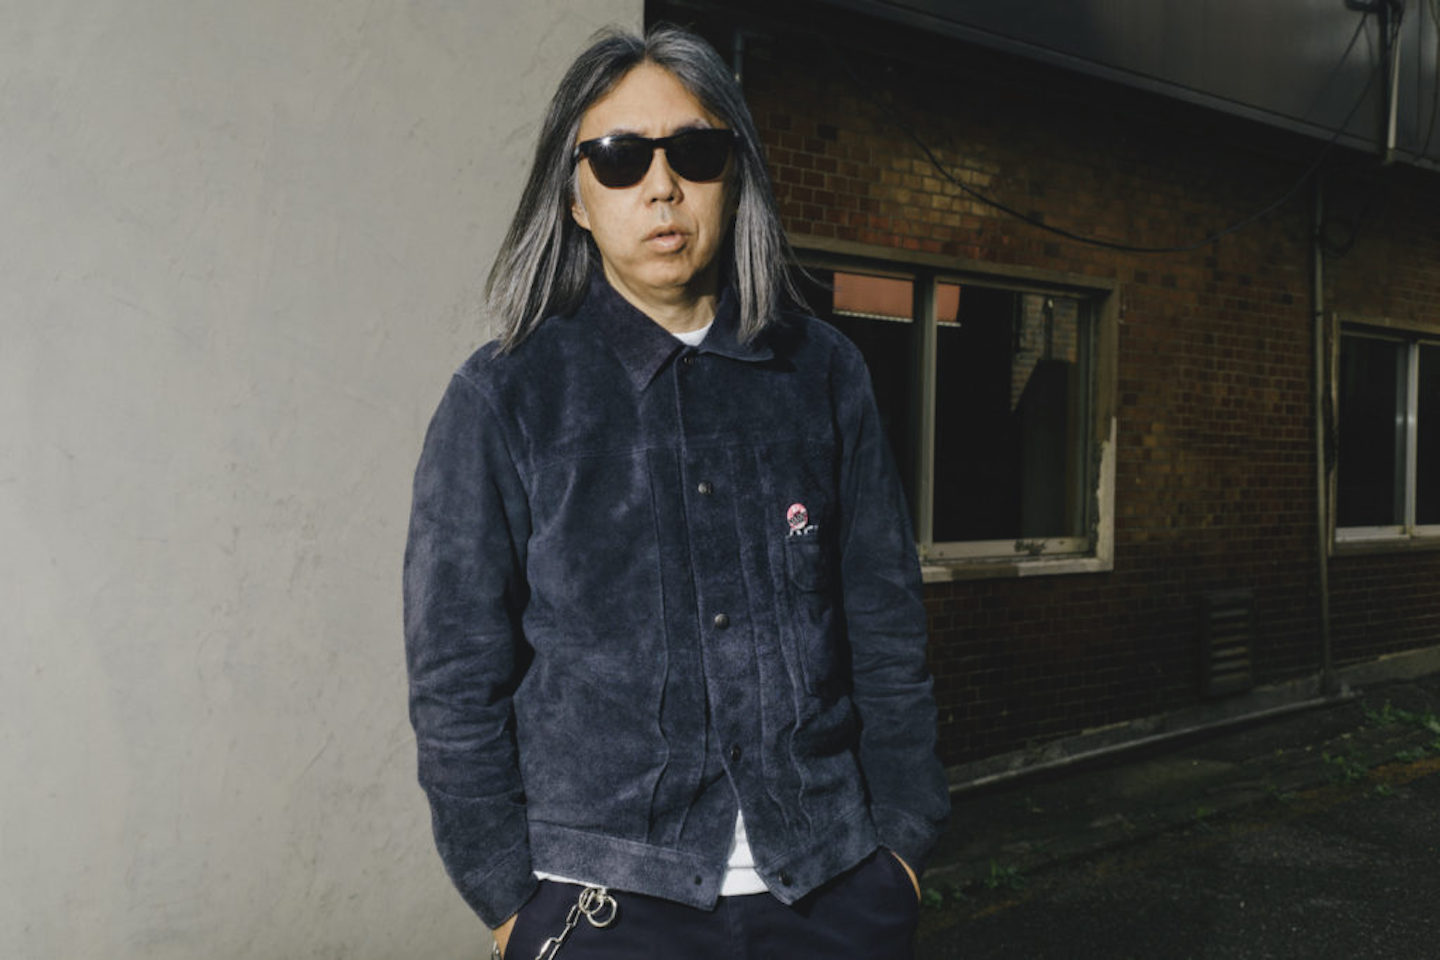 Hiroshi Fujiwara fragment design x Louis Vuitton Jacket First Look